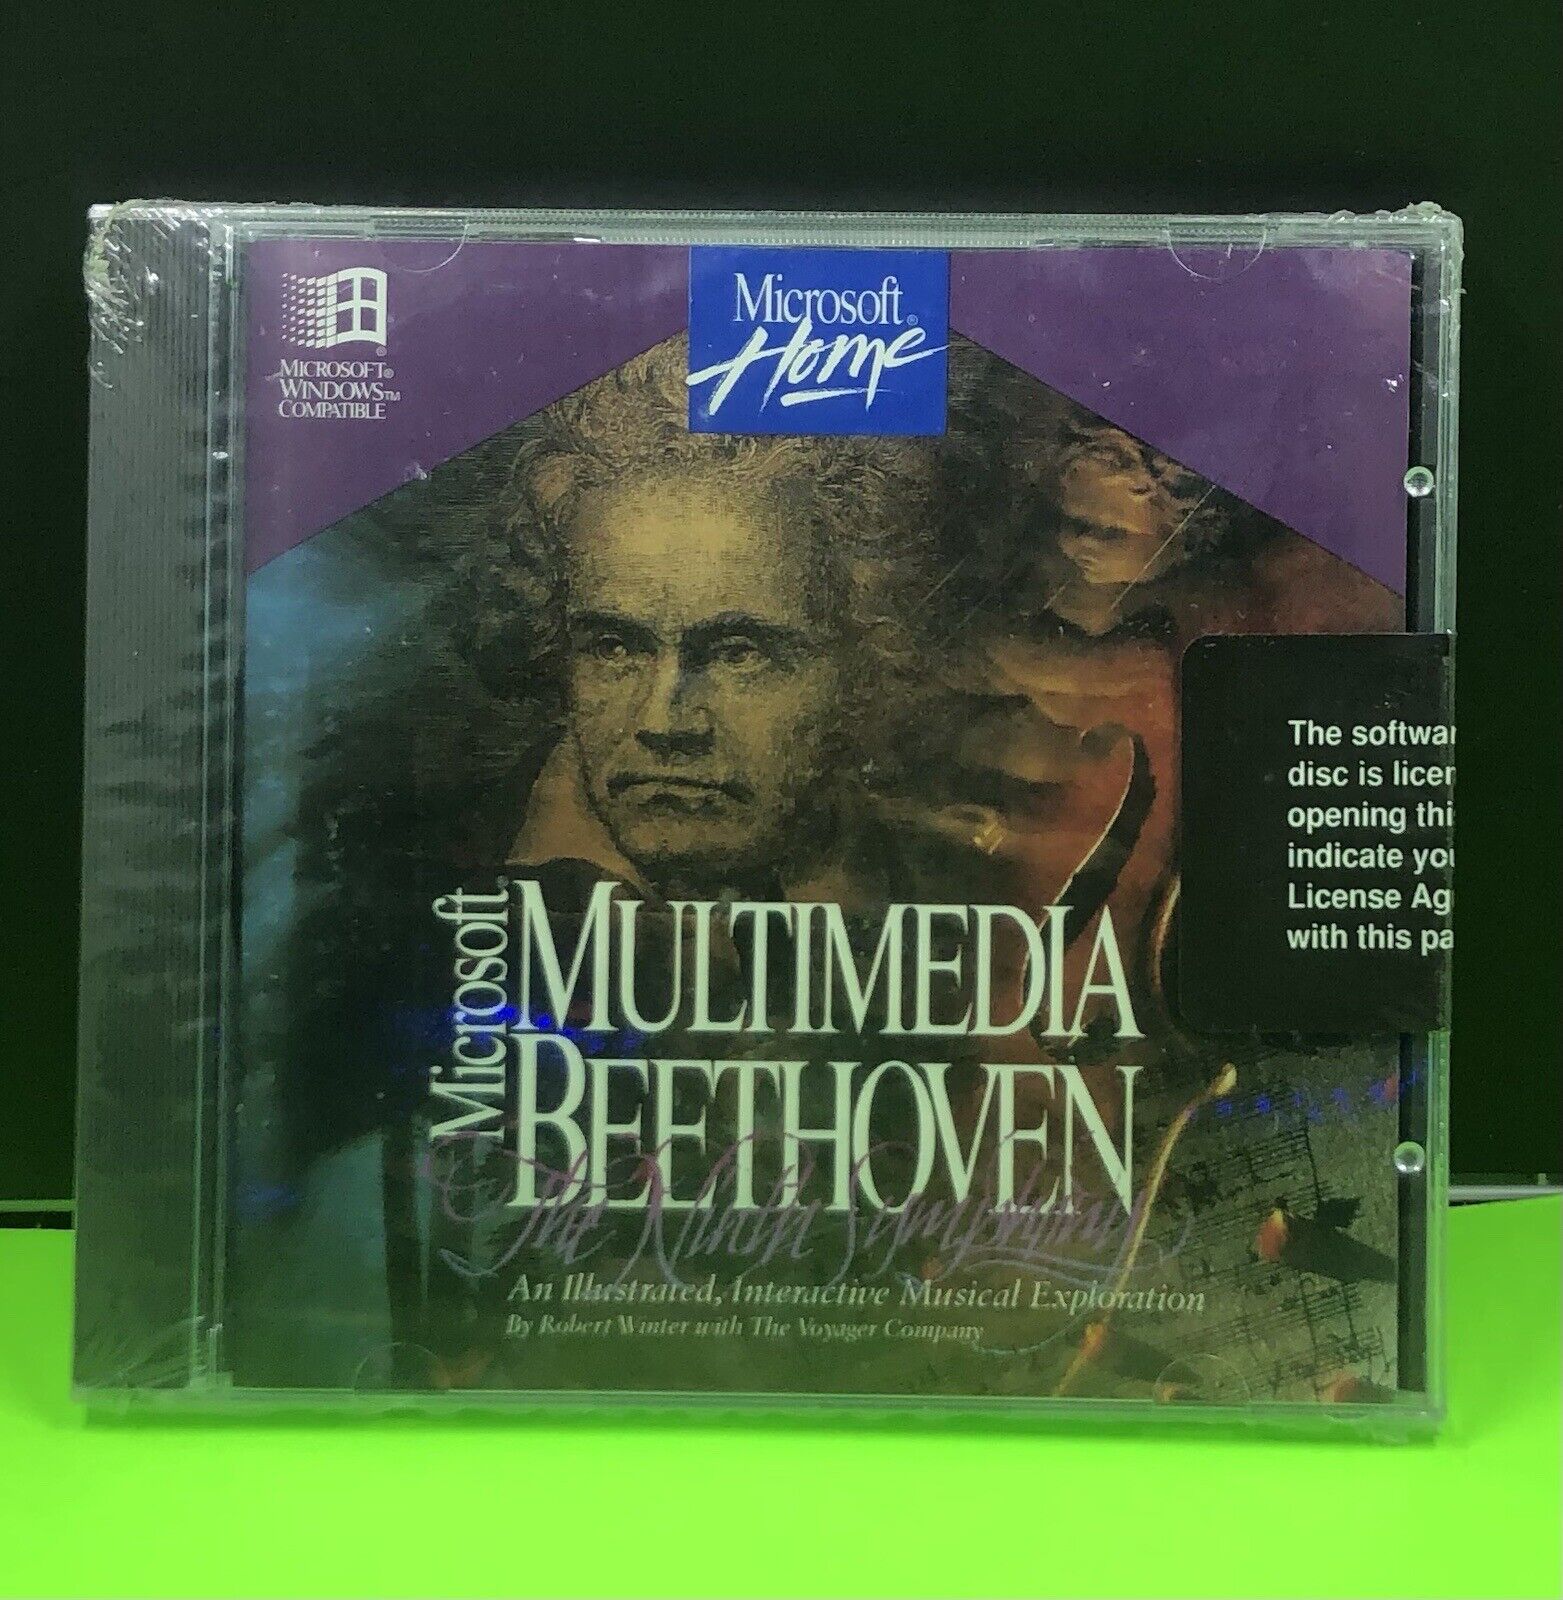 Microsoft Multimedia Beethoven The Ninth Symphony PC 1994 New Sealed NIP NIB